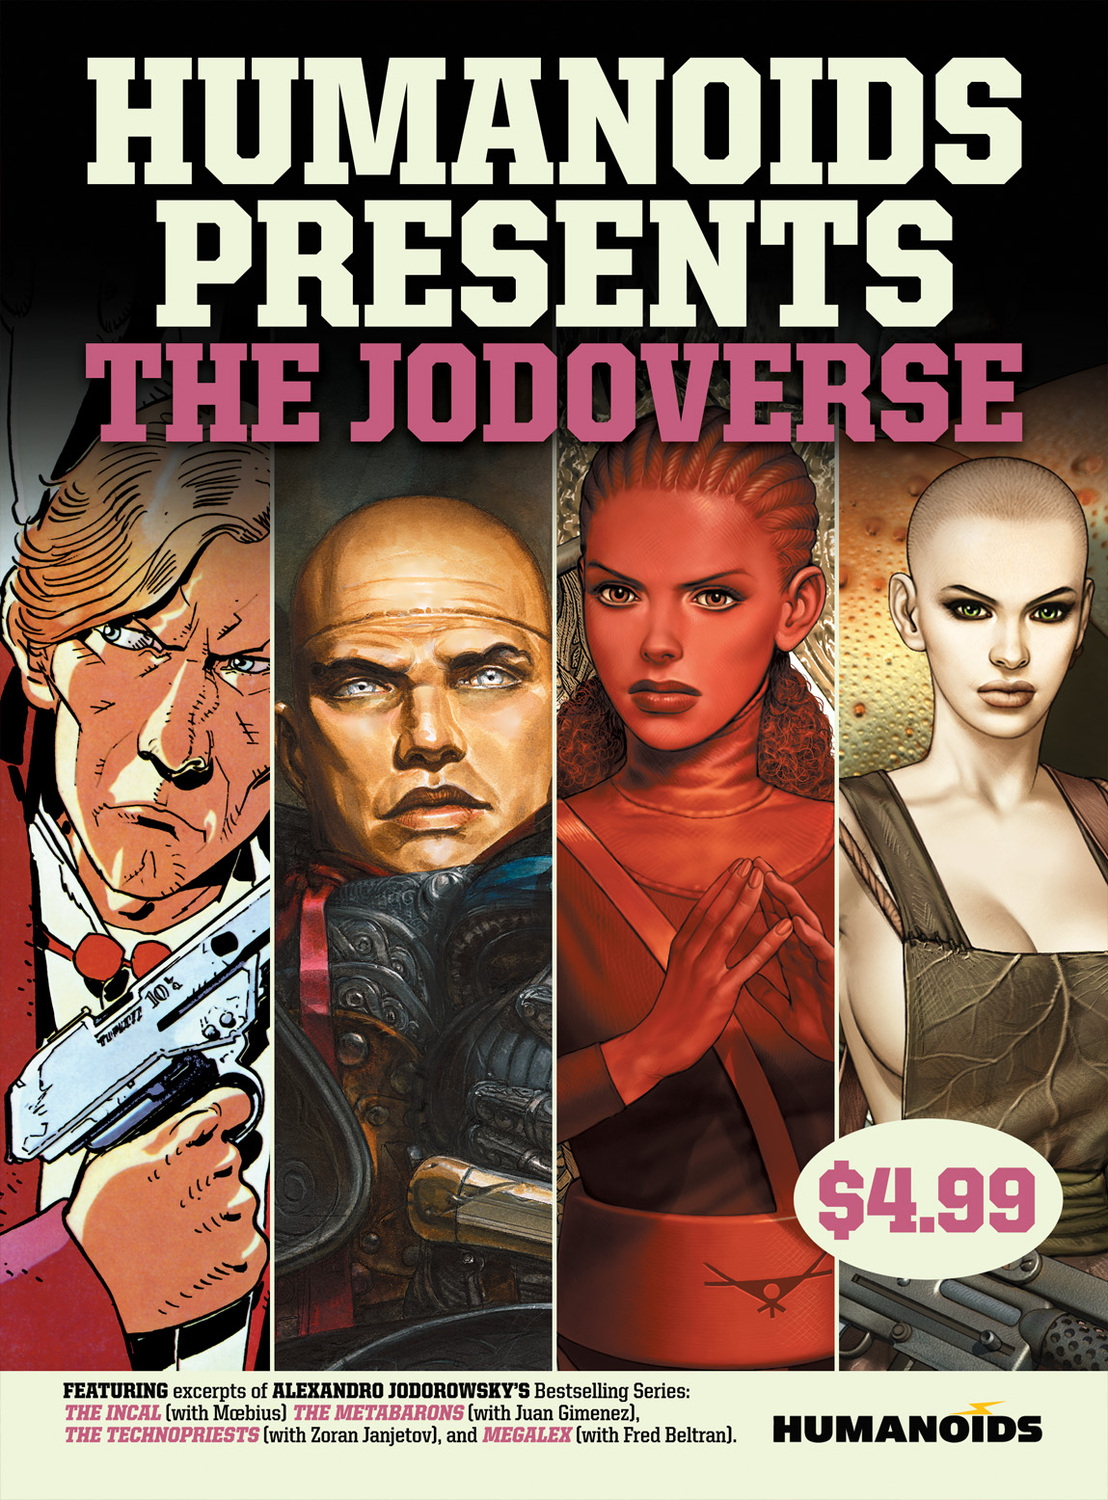 Humanoids Presents Jodoverse Cover.jpg